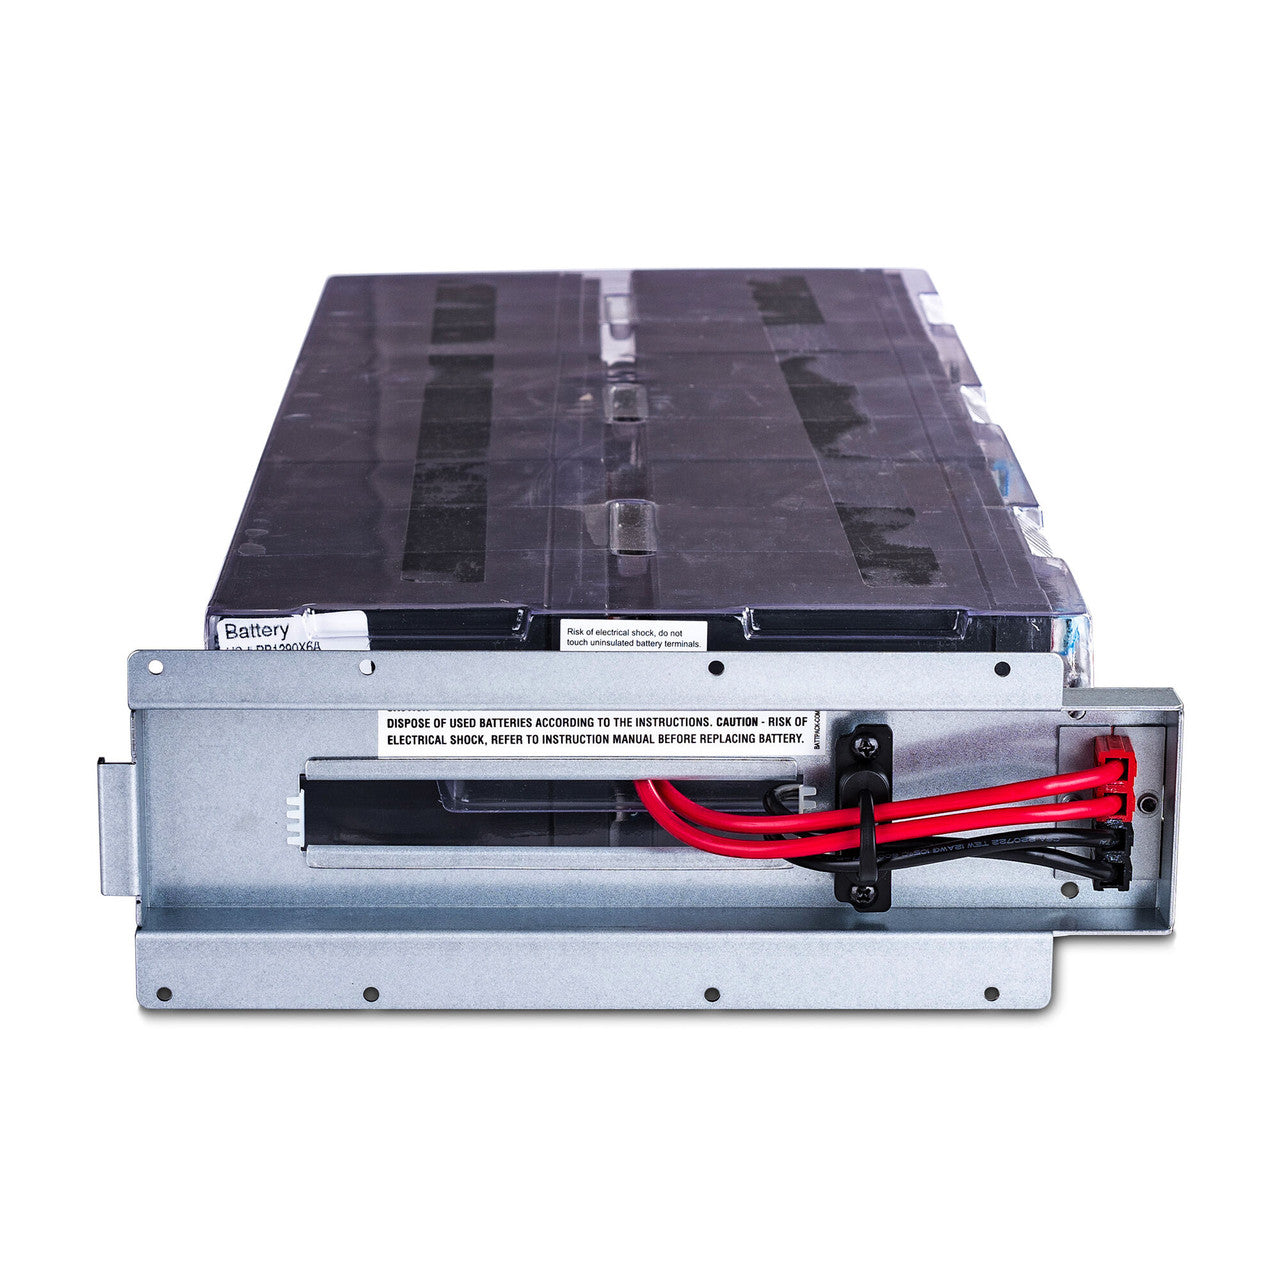 CyberPower RB1290X6A Replacement Battery Cartridge for OL2200RTXL2U, OL3000RTXL2U and OL3000RTXL2UHV. 18 Month Warranty